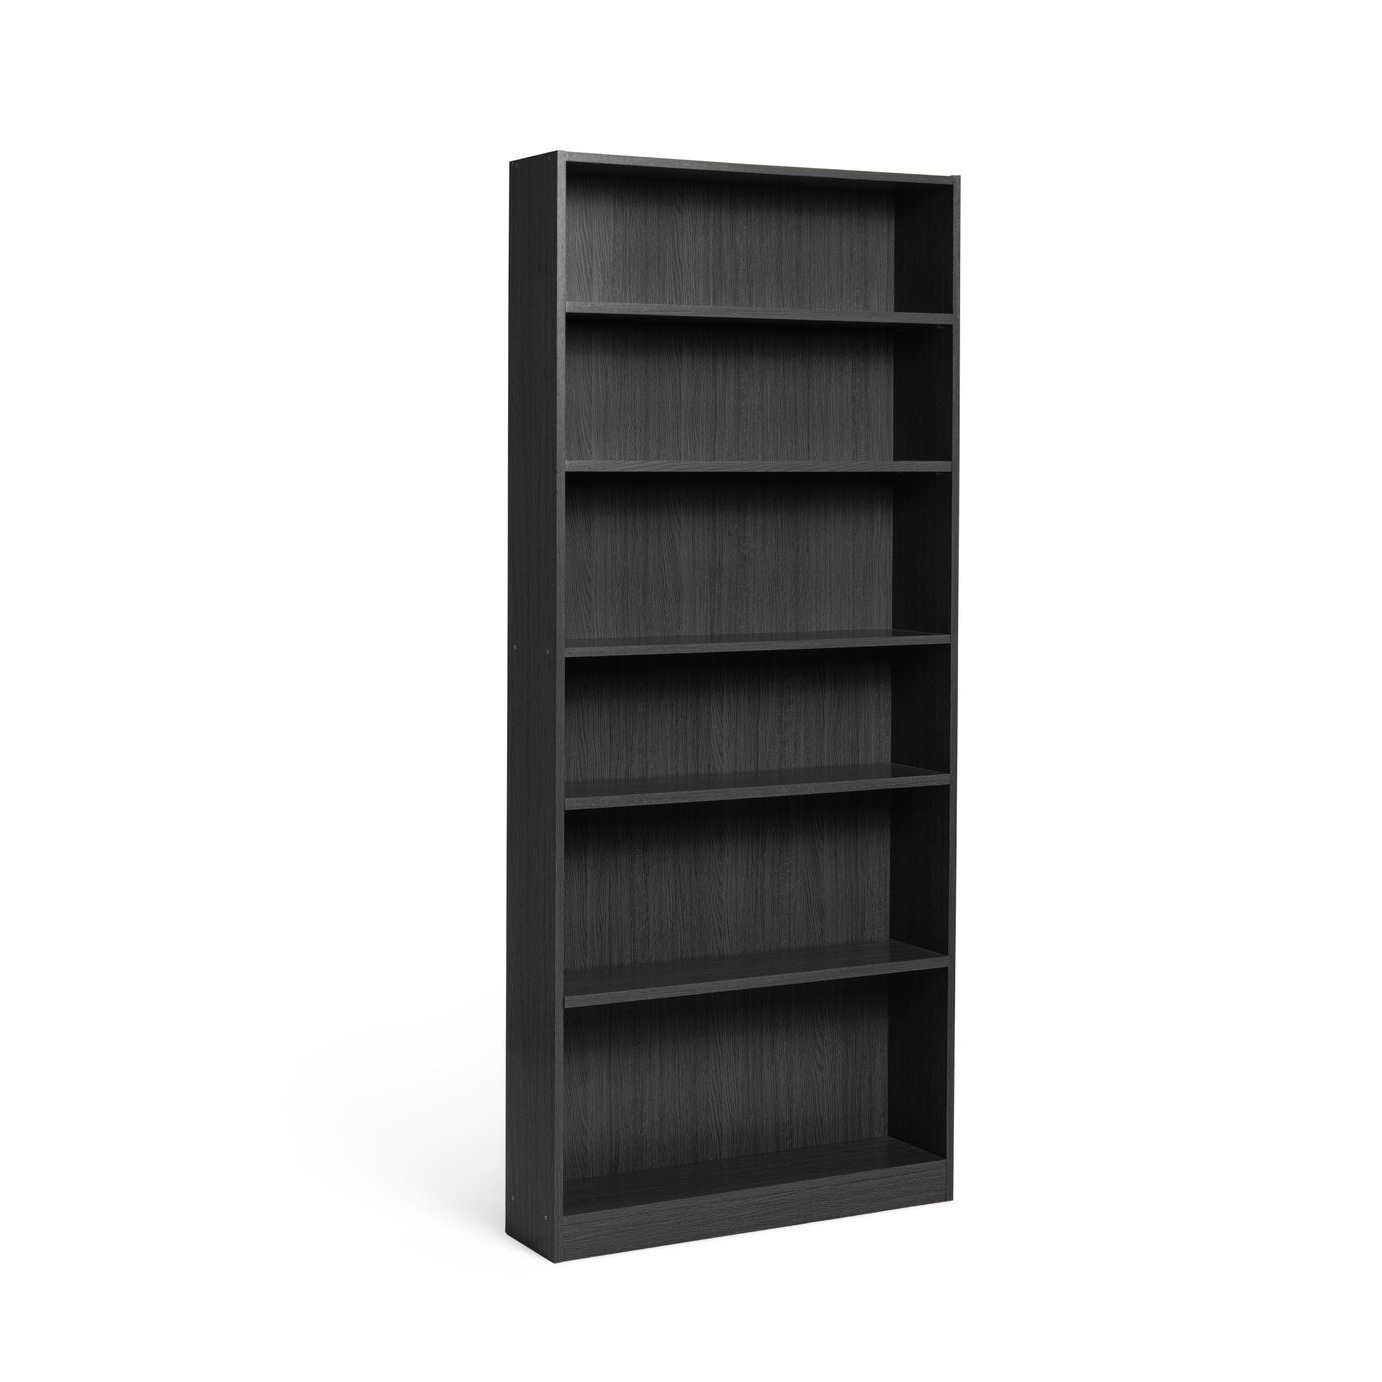 Argos Home Maine Deep Bookcase - Black - image 1